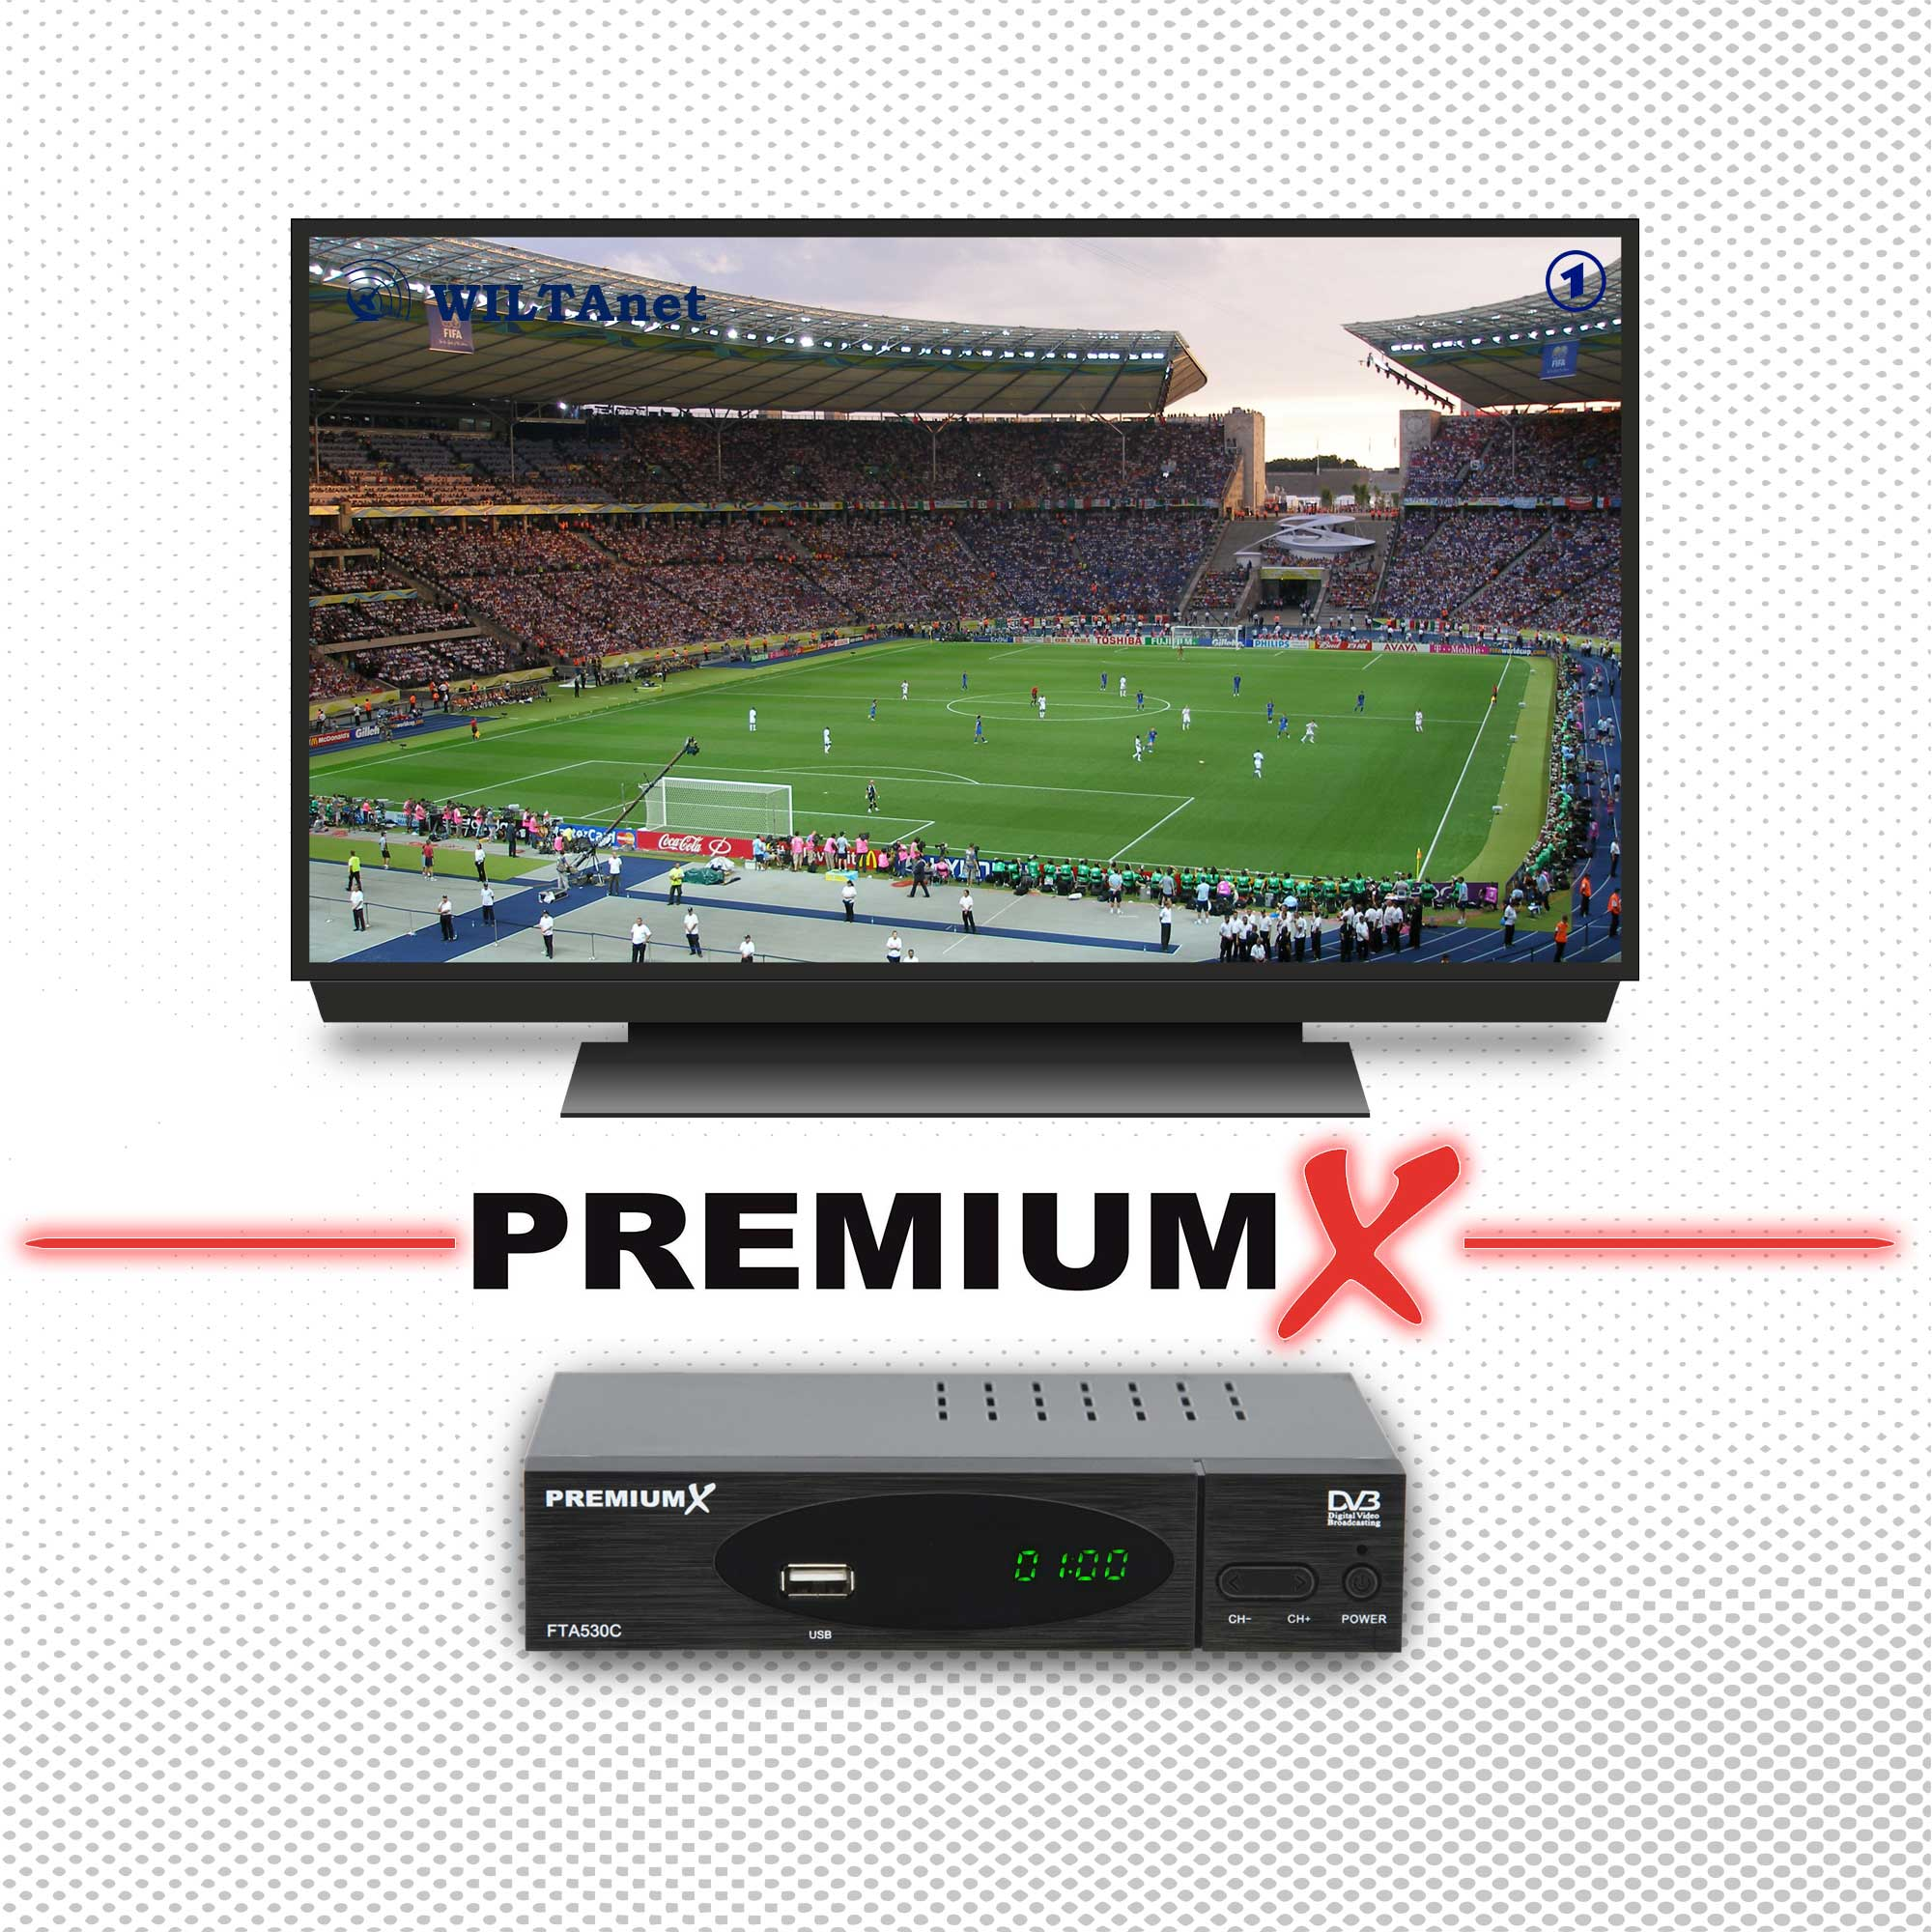 PREMIUMX FTA USB HD FullHD Digital DVB-C HDMI 530C Receiver Kabel Kabel Receiver SCART (Schwarz)